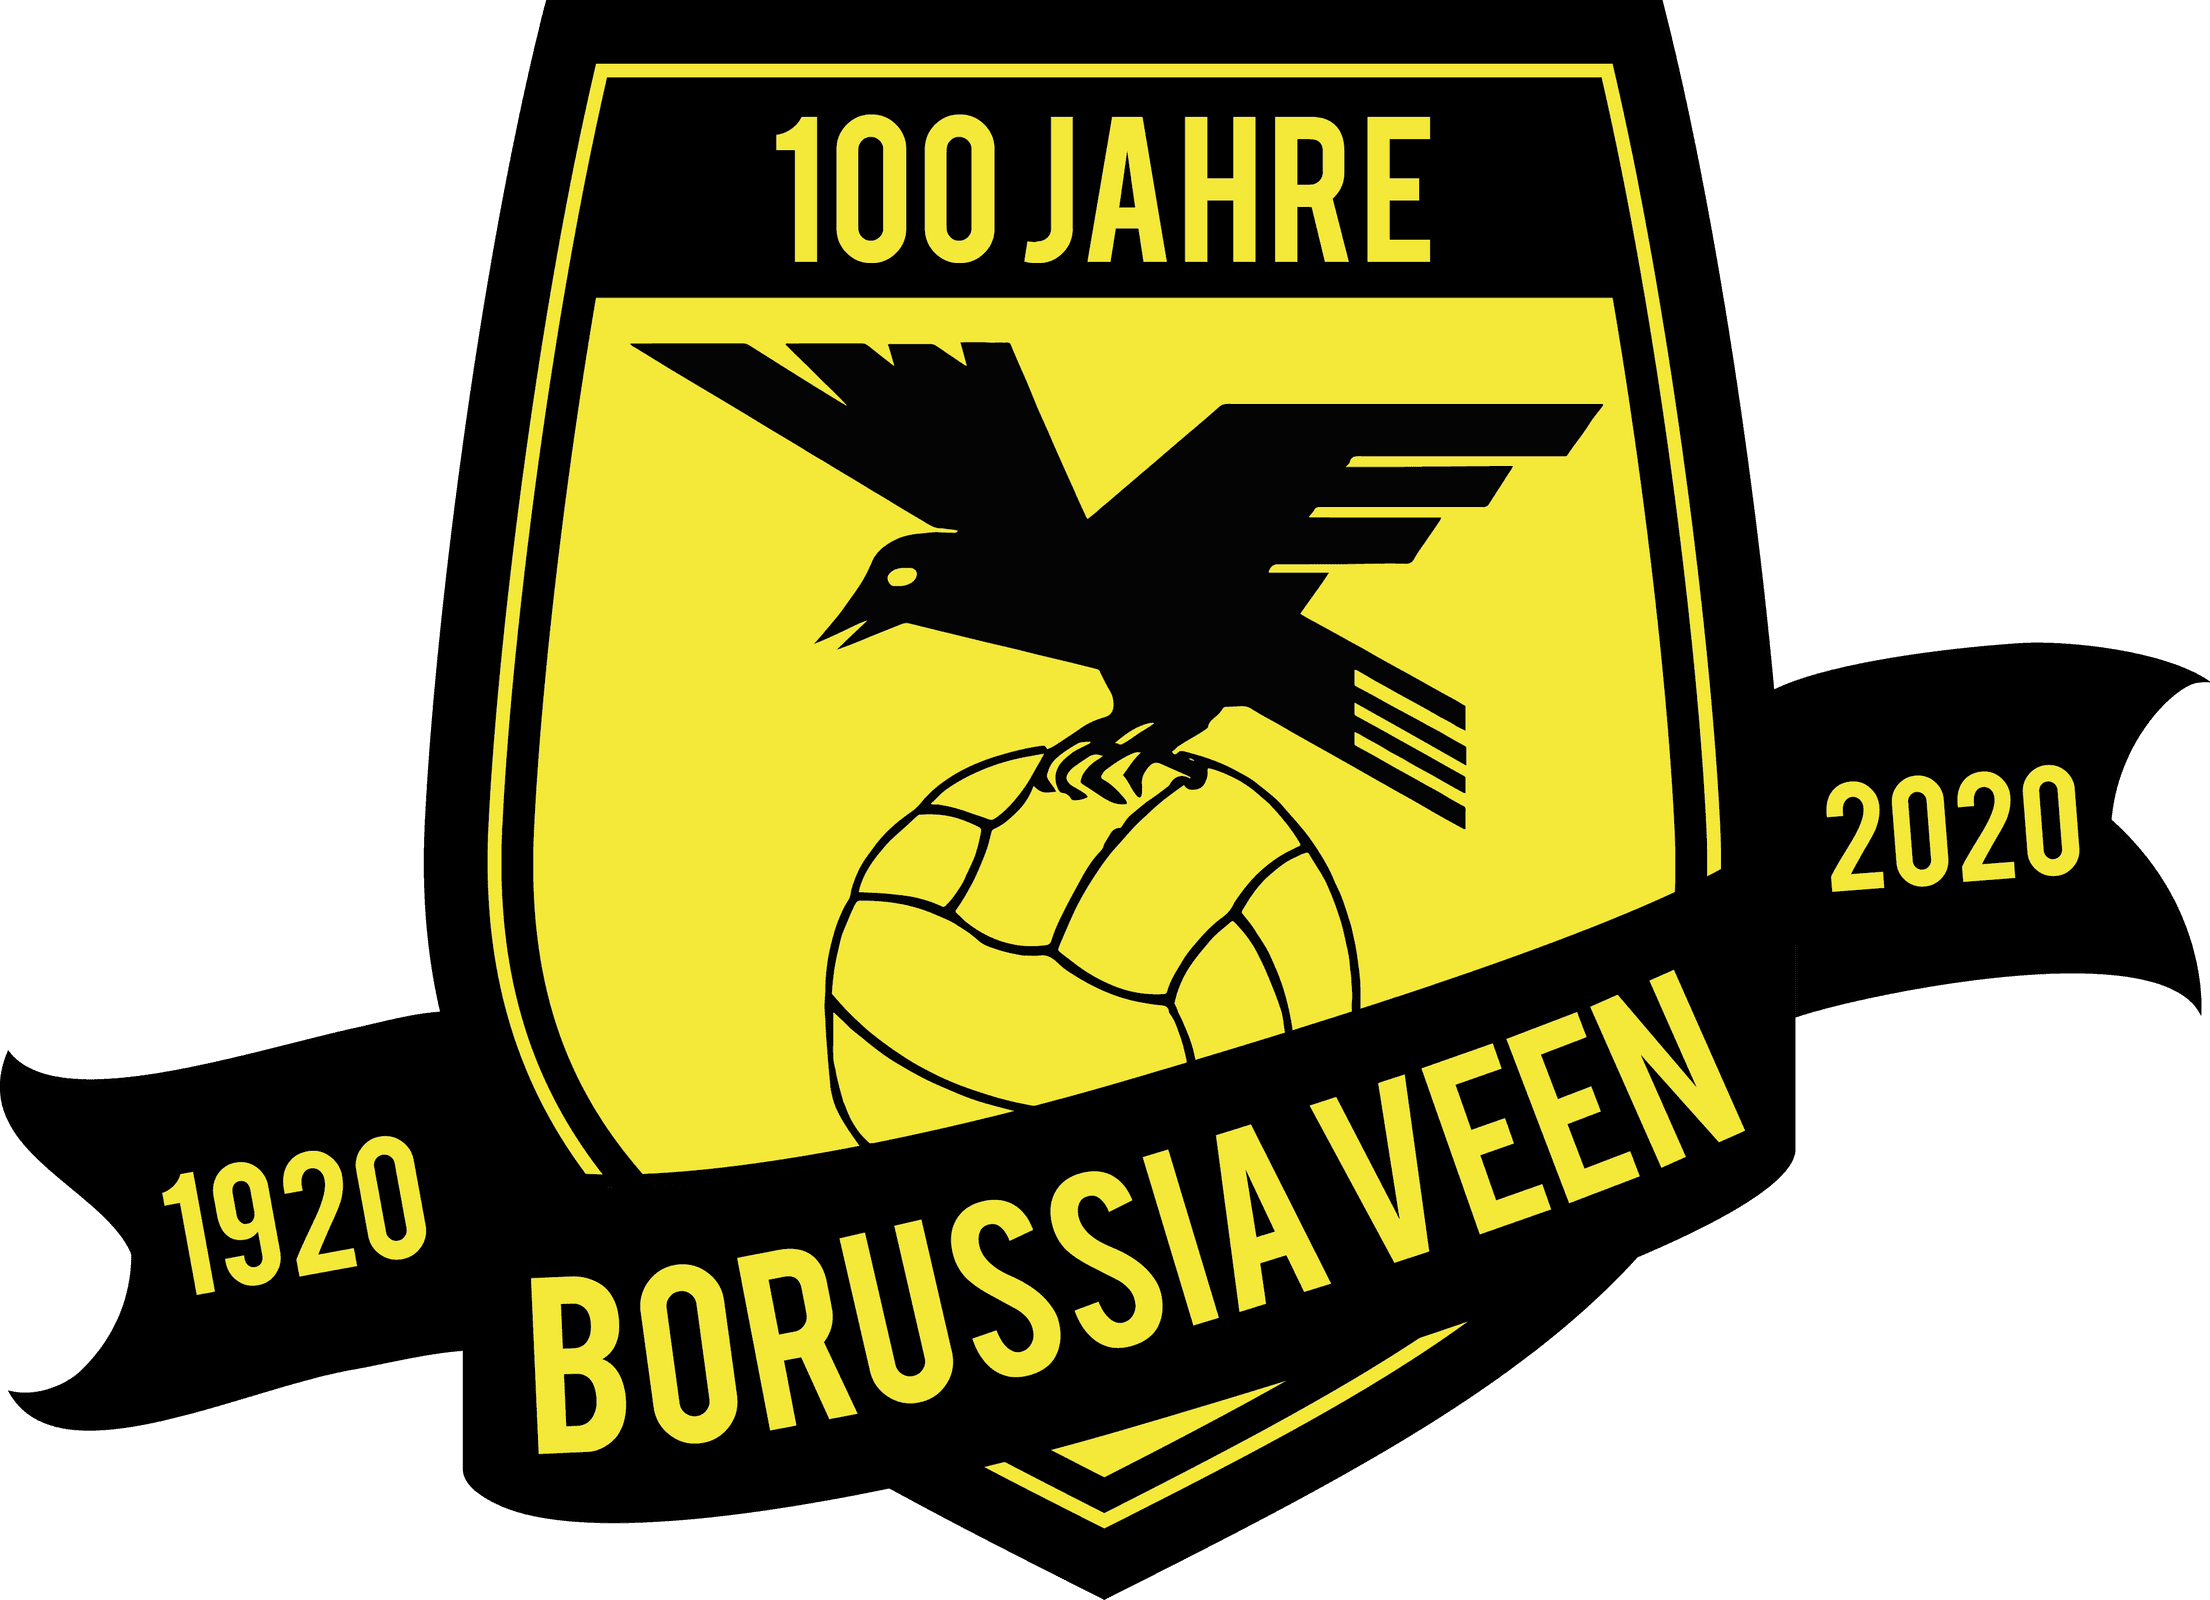 Borussia Veen